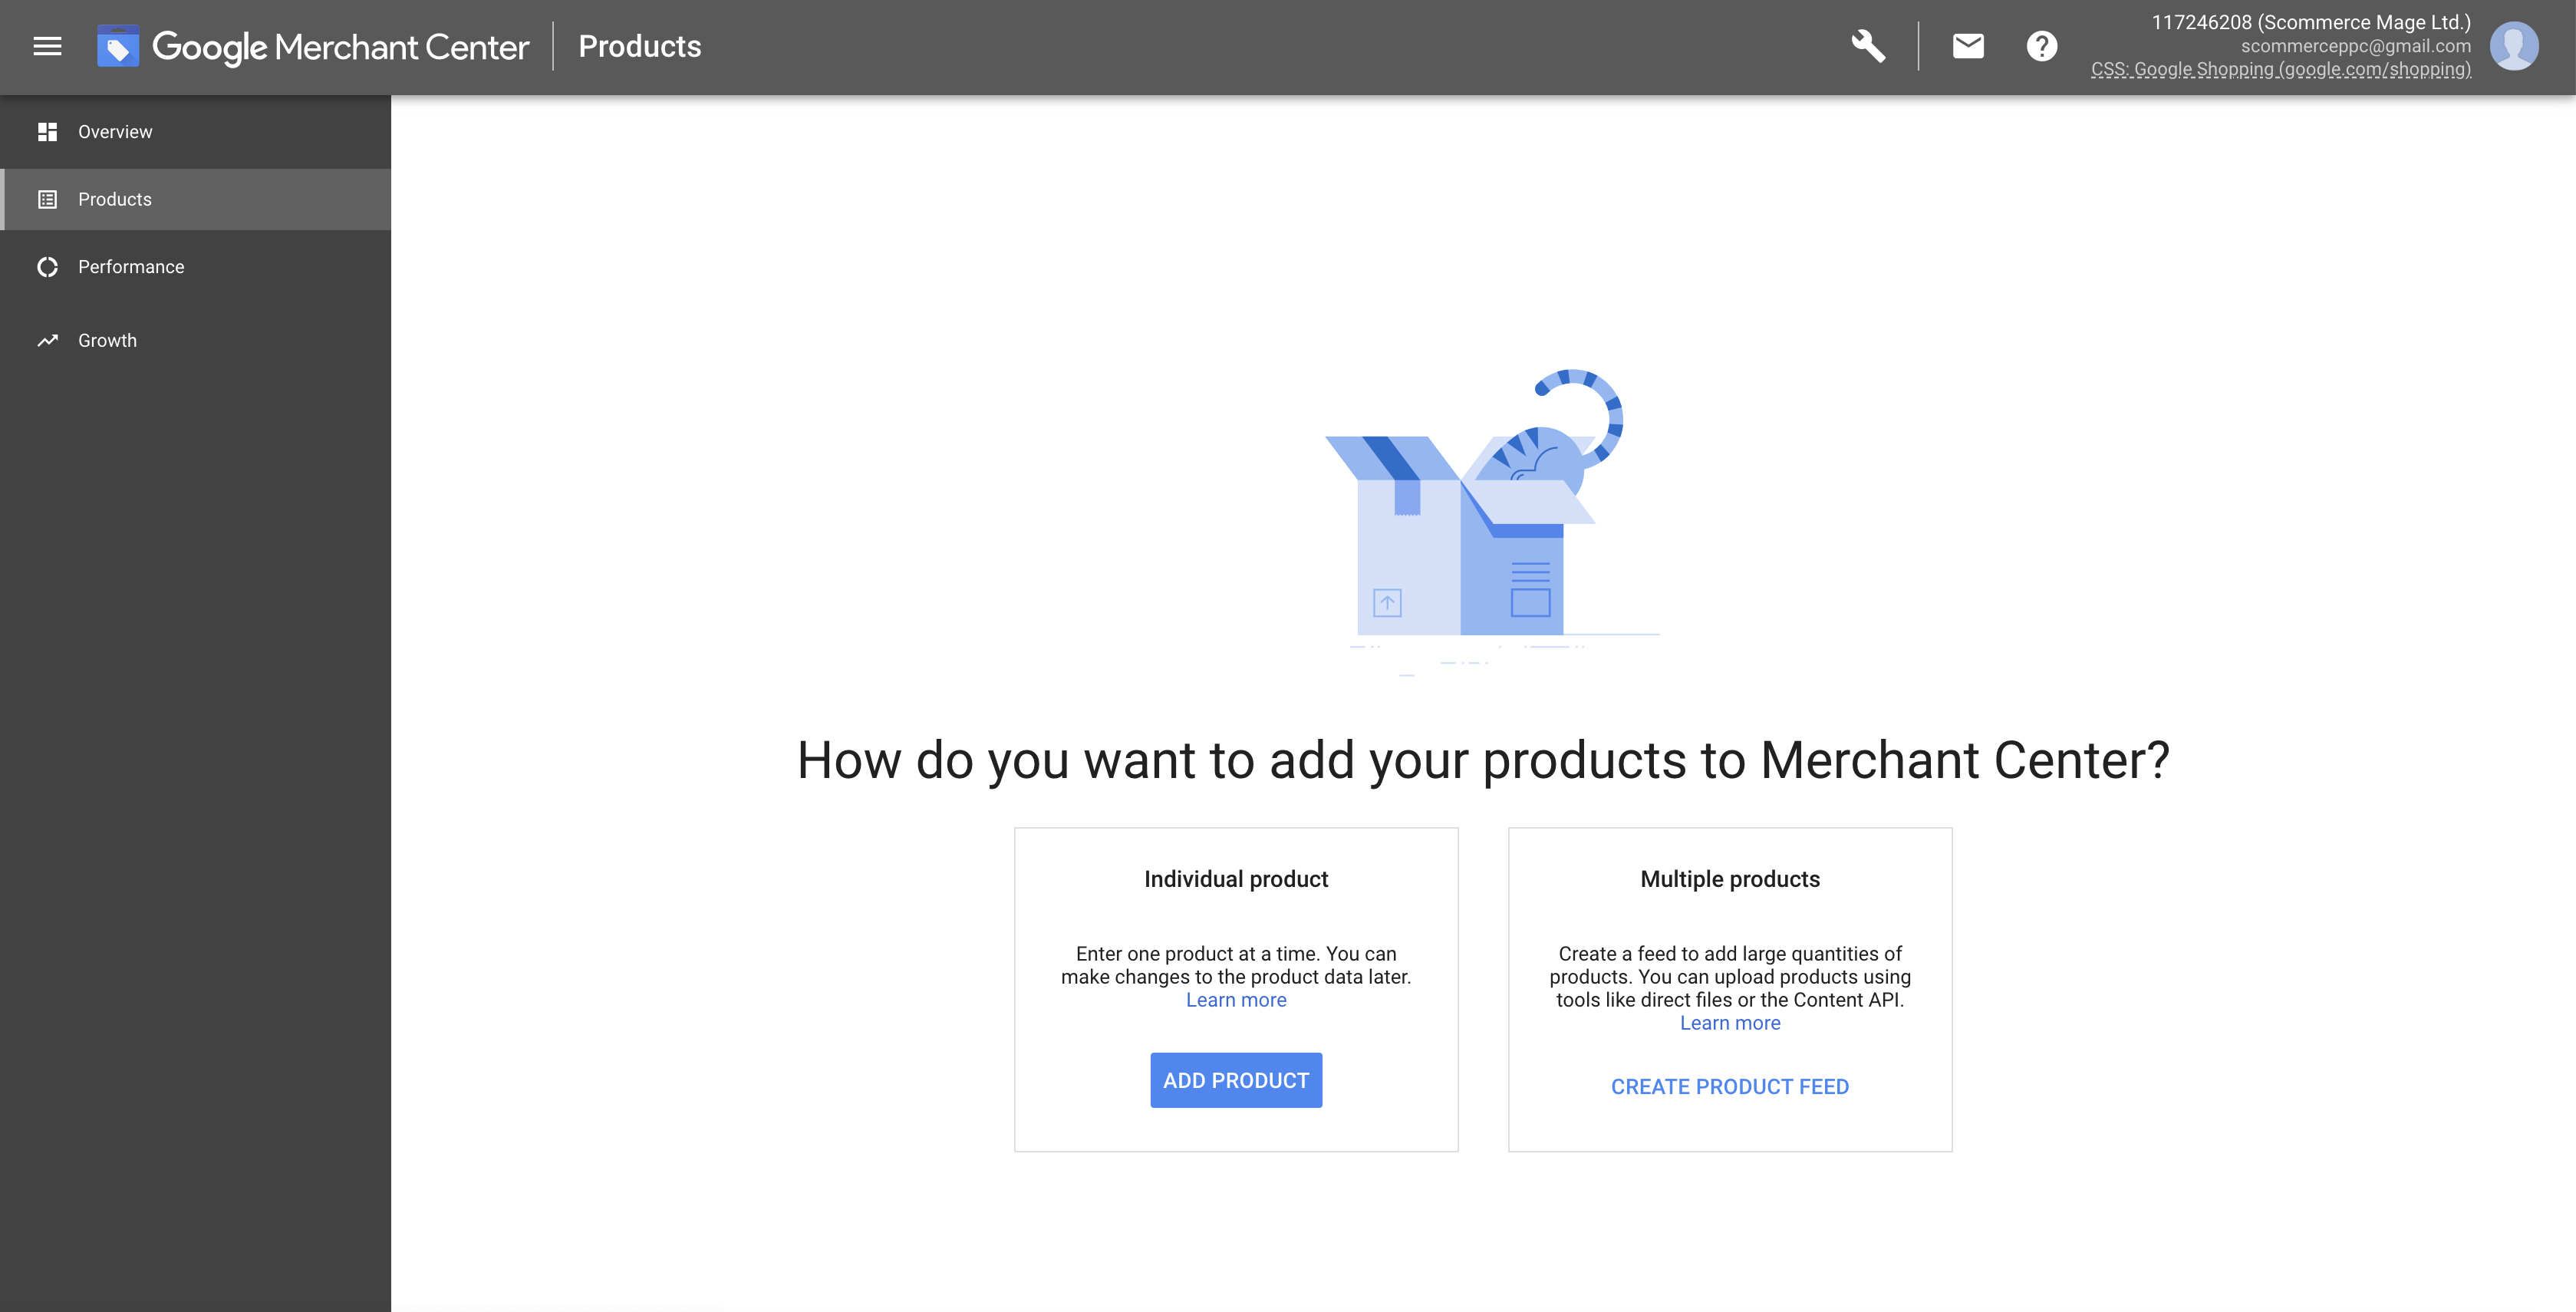 Google Merchant Center Products